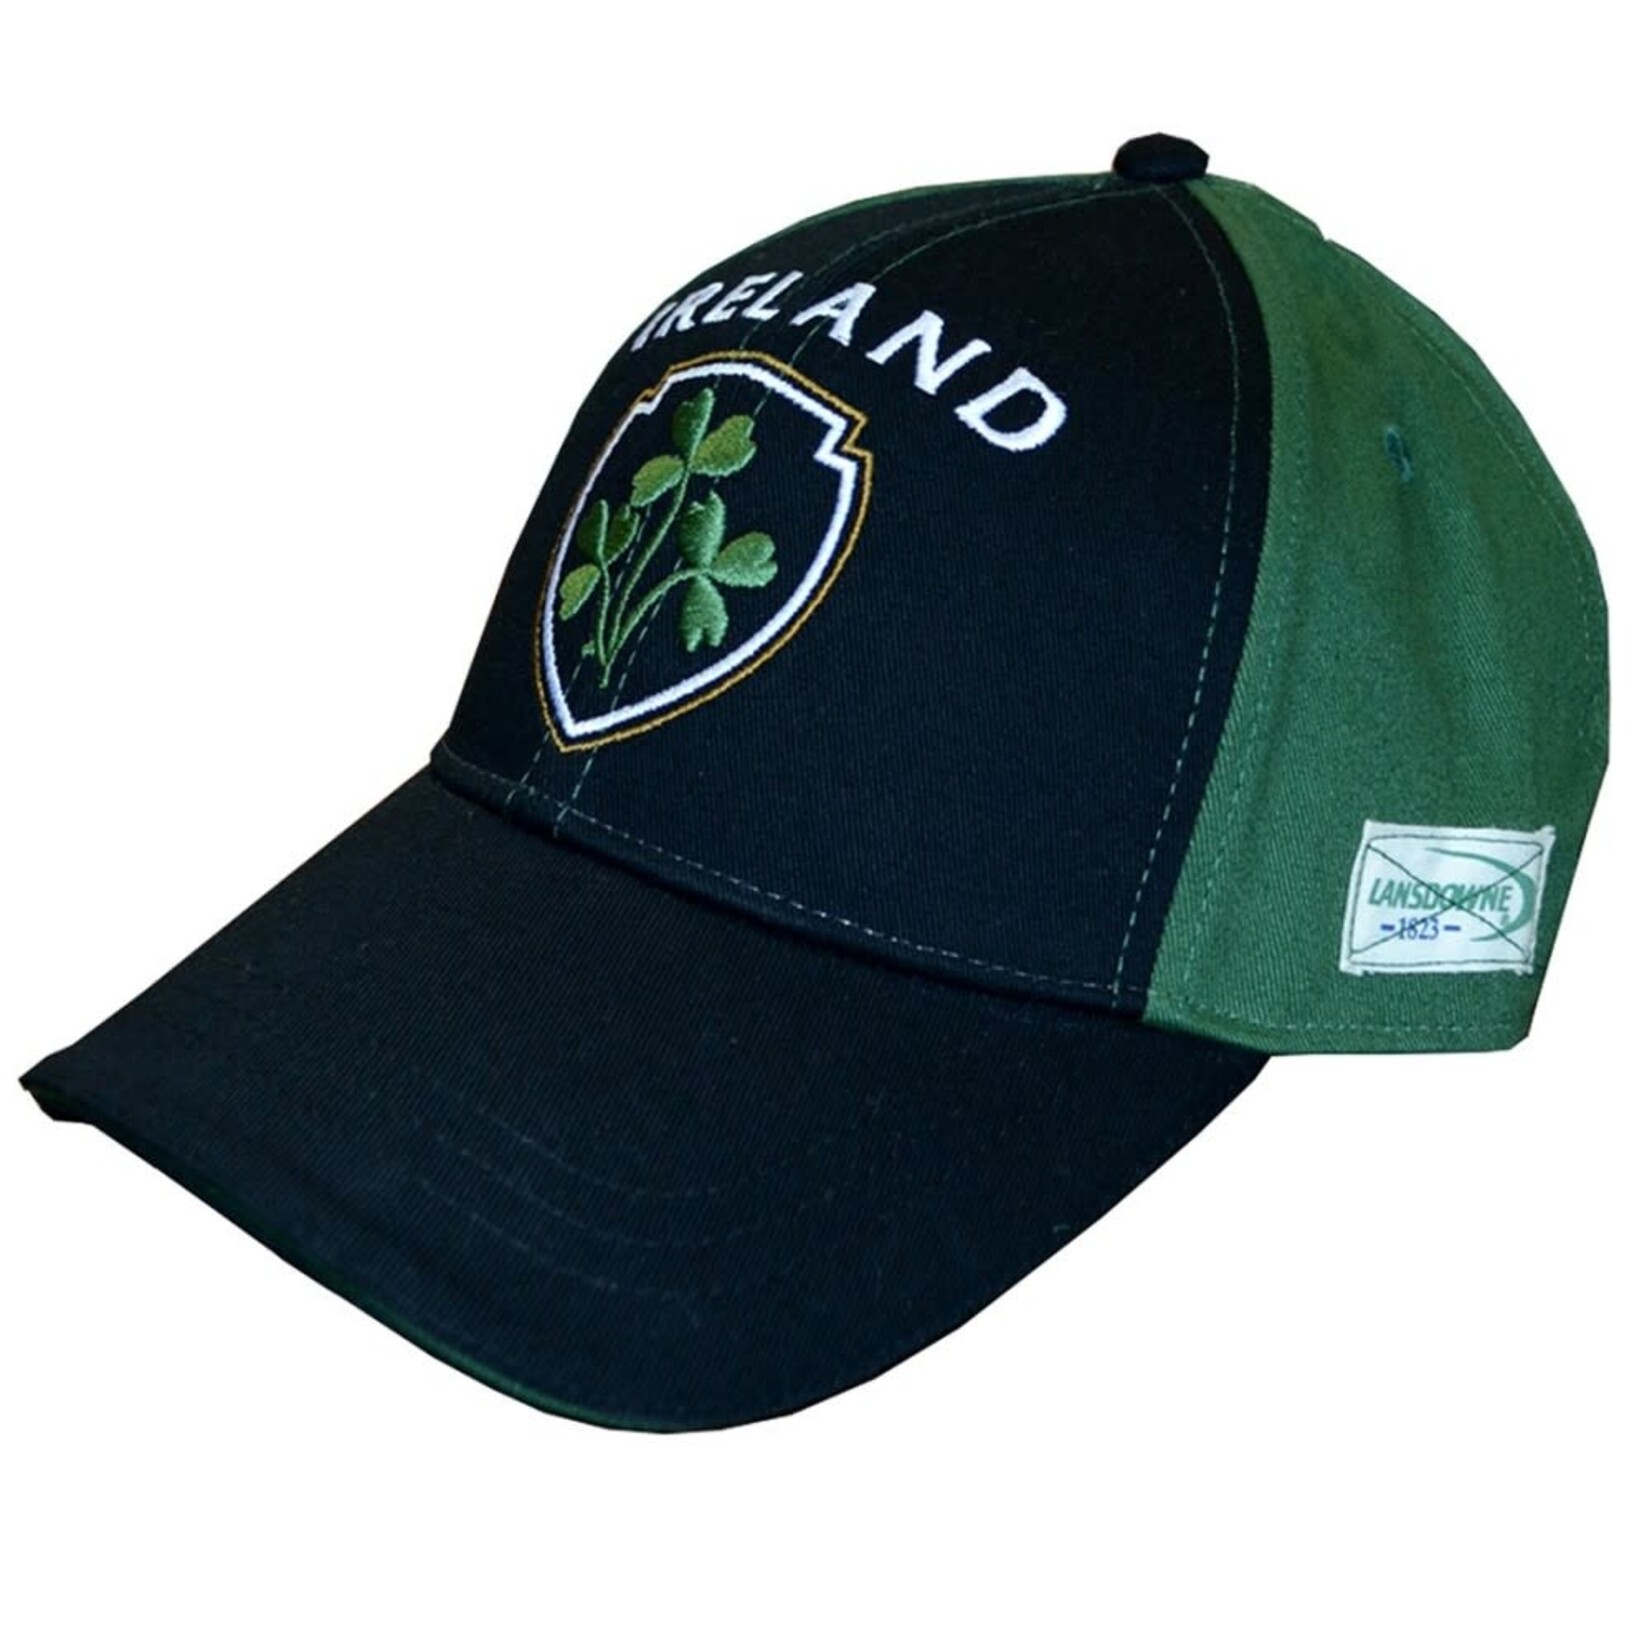 Navy/Emerald Crest Baseball Cap